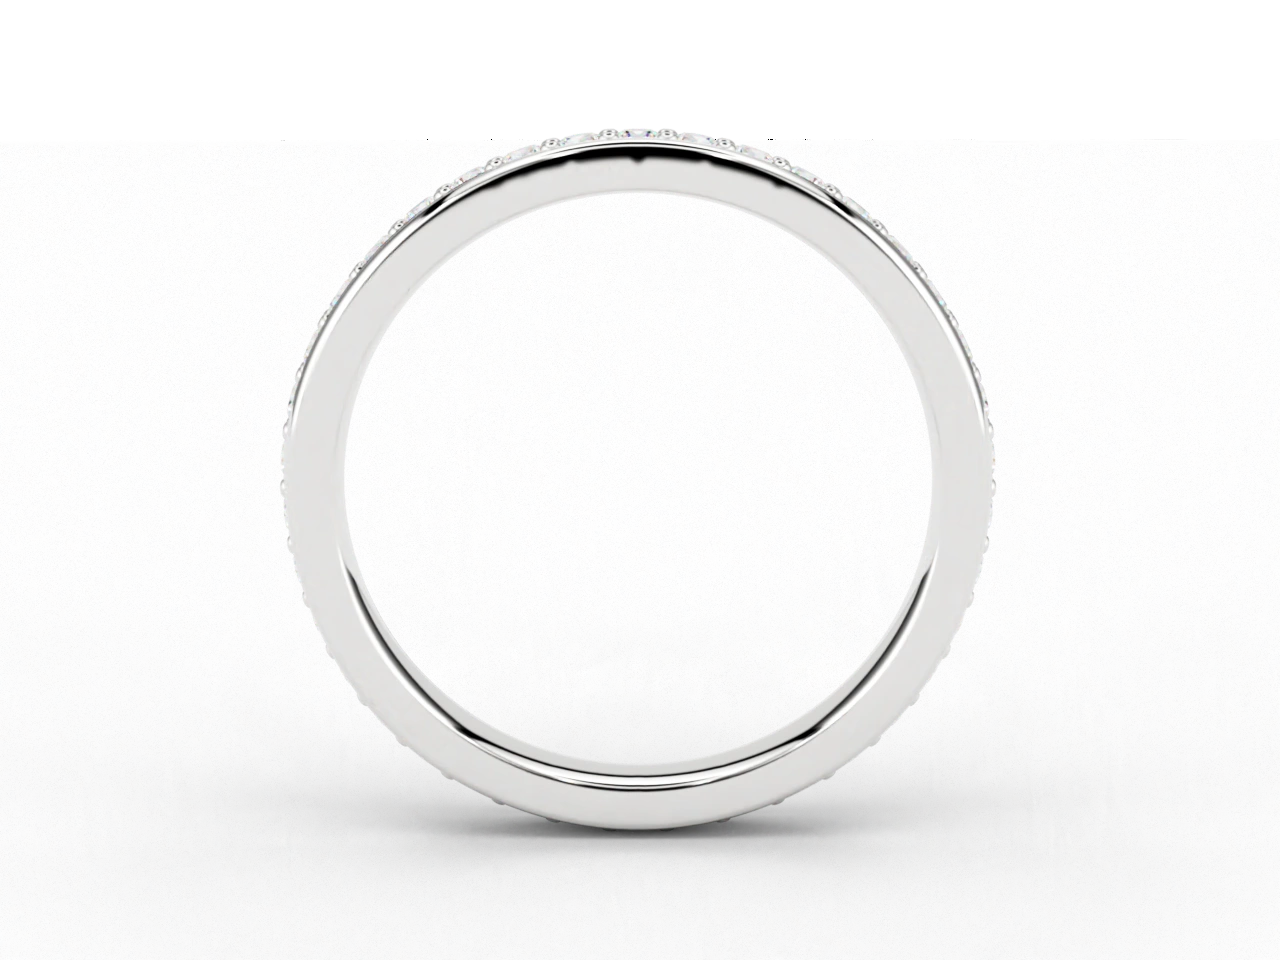 Round Brilliant 0.6ct Grain-Set Full Eternity Ring in Recycled Platinum